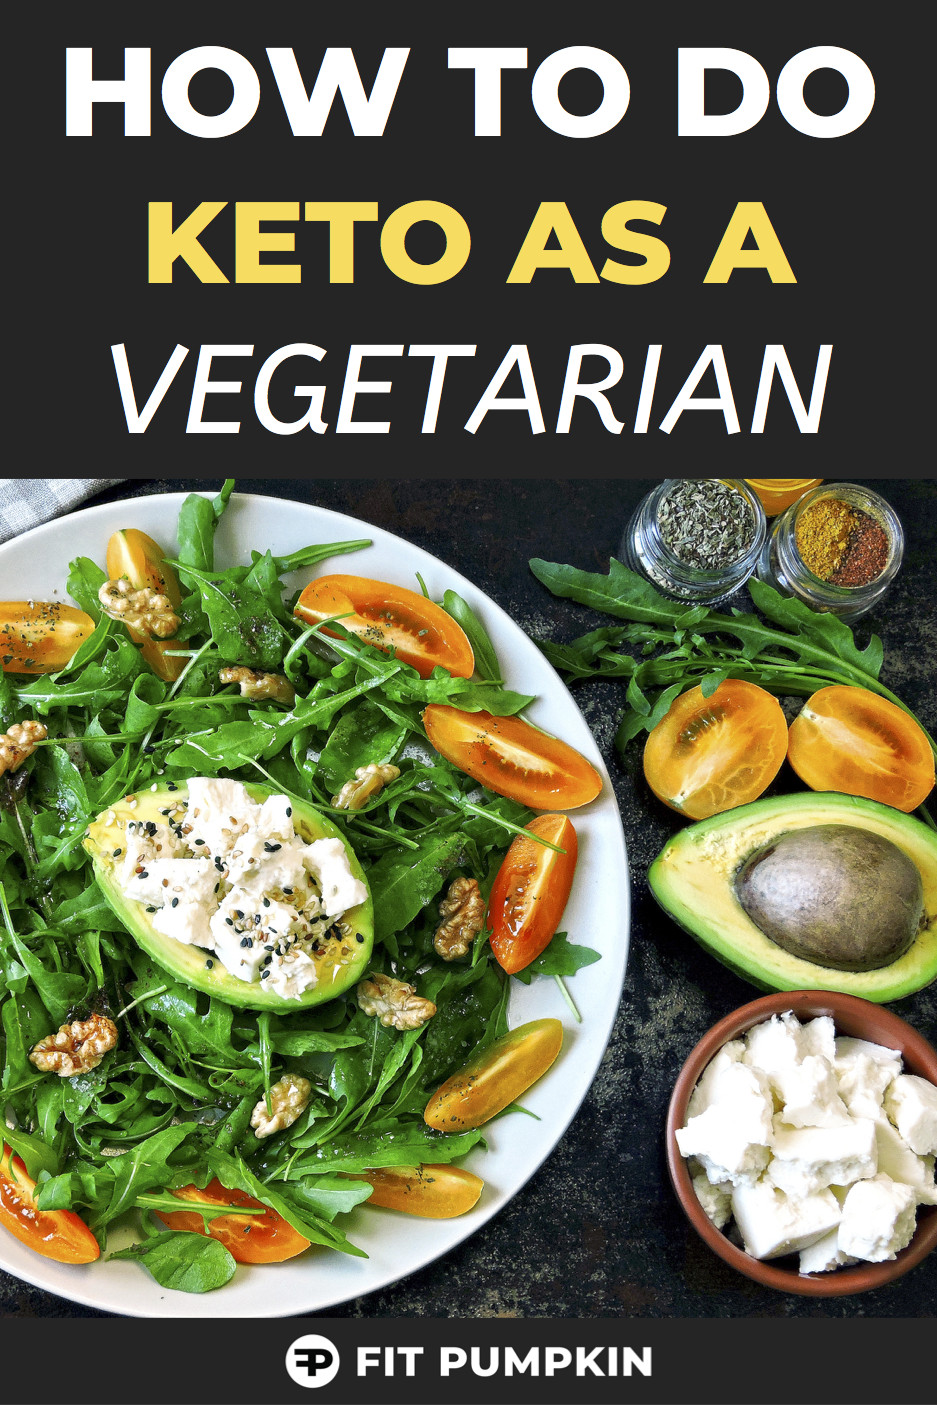 Keto Diet For Beginners Indian Vegetarian
 Ve arian Keto The Ultimate Beginner s Guide